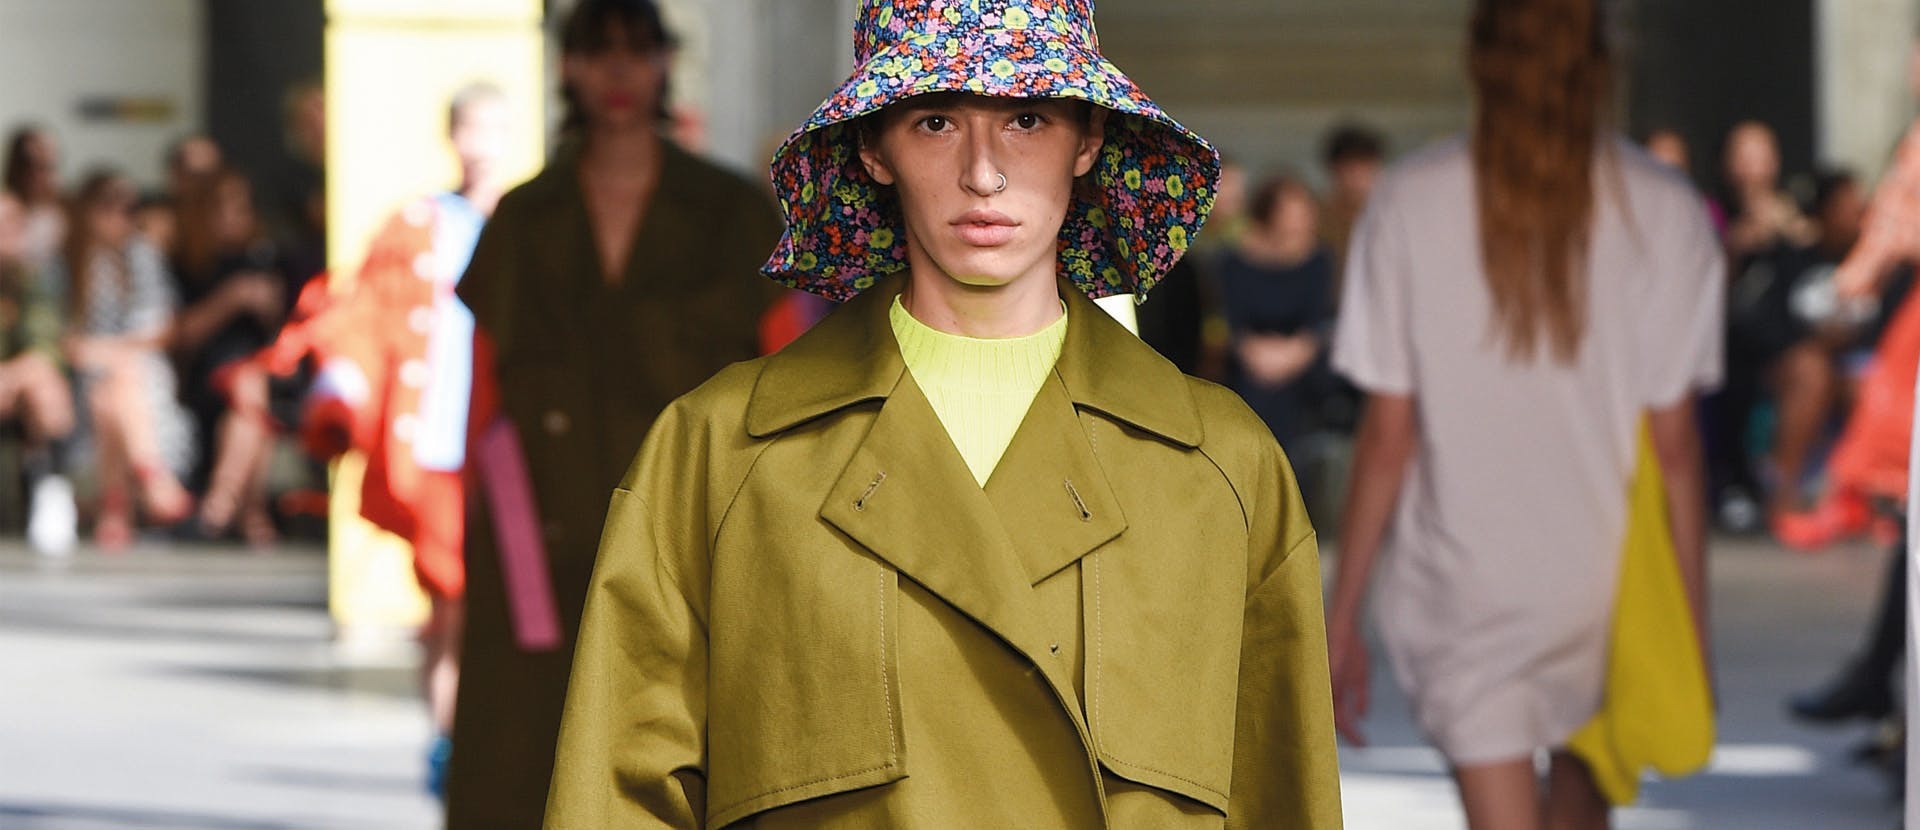 clothing apparel human person coat overcoat hat